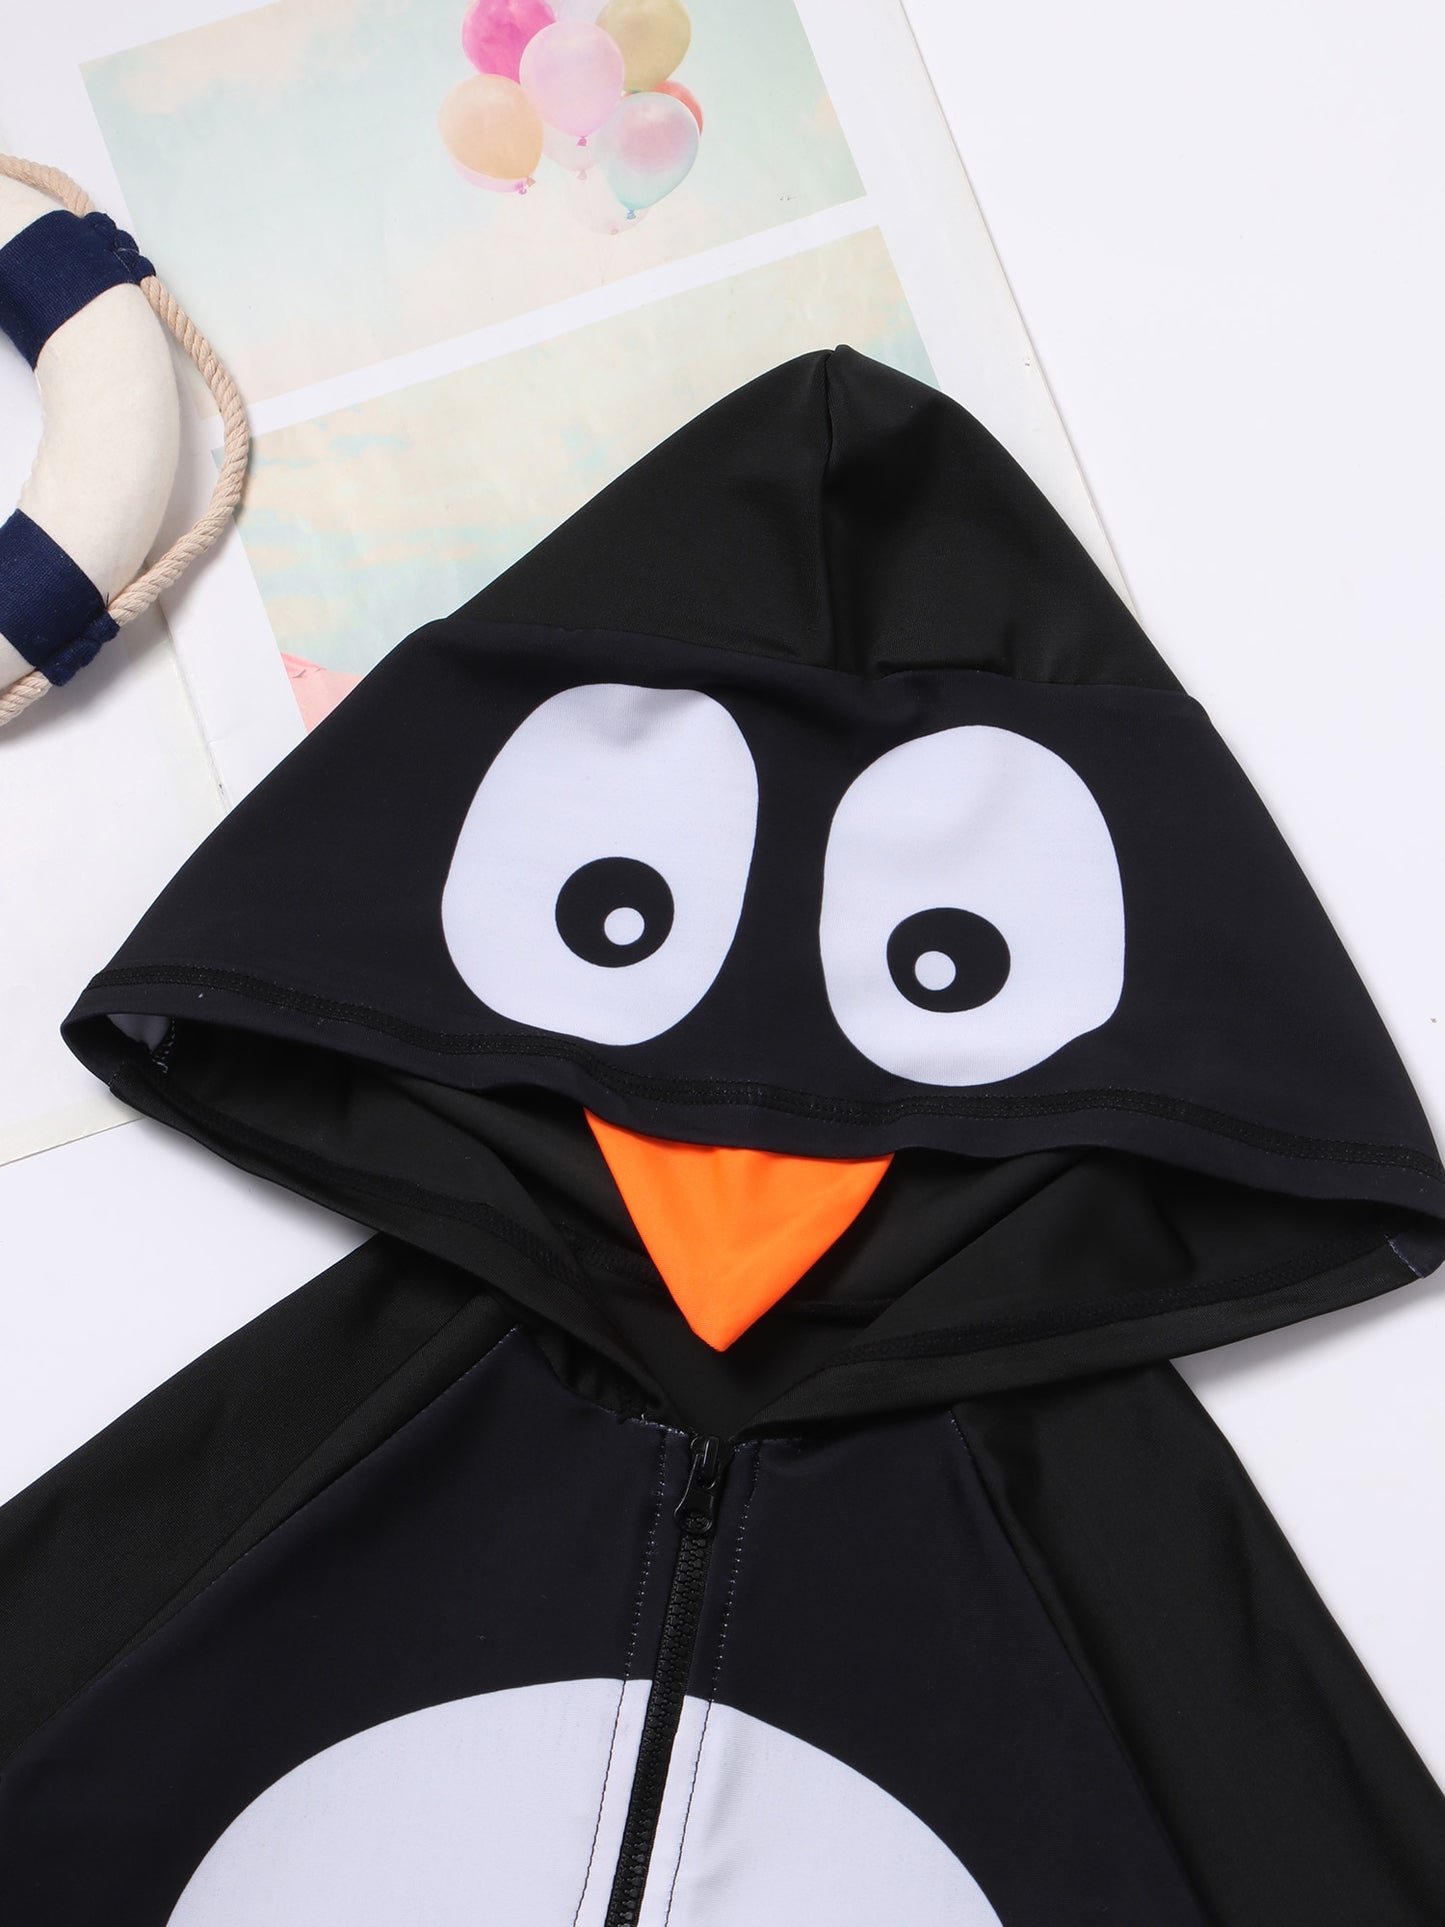 Kids Girls and Boys Swimsuit Hooded Long Sleeves Zipper Closure Penguin Pattern Swimming Swimwear